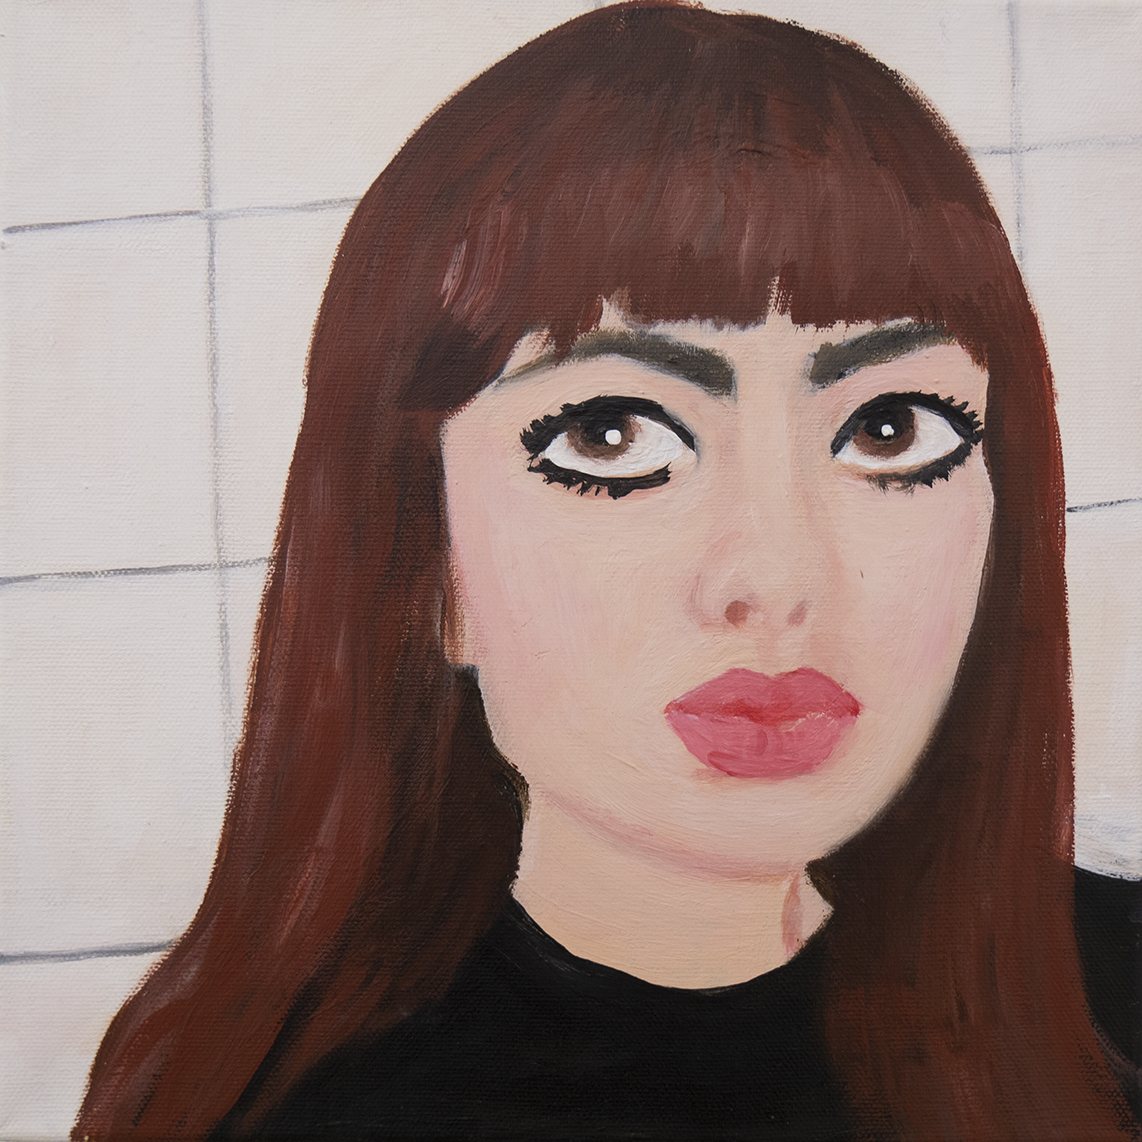 Marie Capaldi - Indie, acrylic on canvas, 30x30cm, 2018